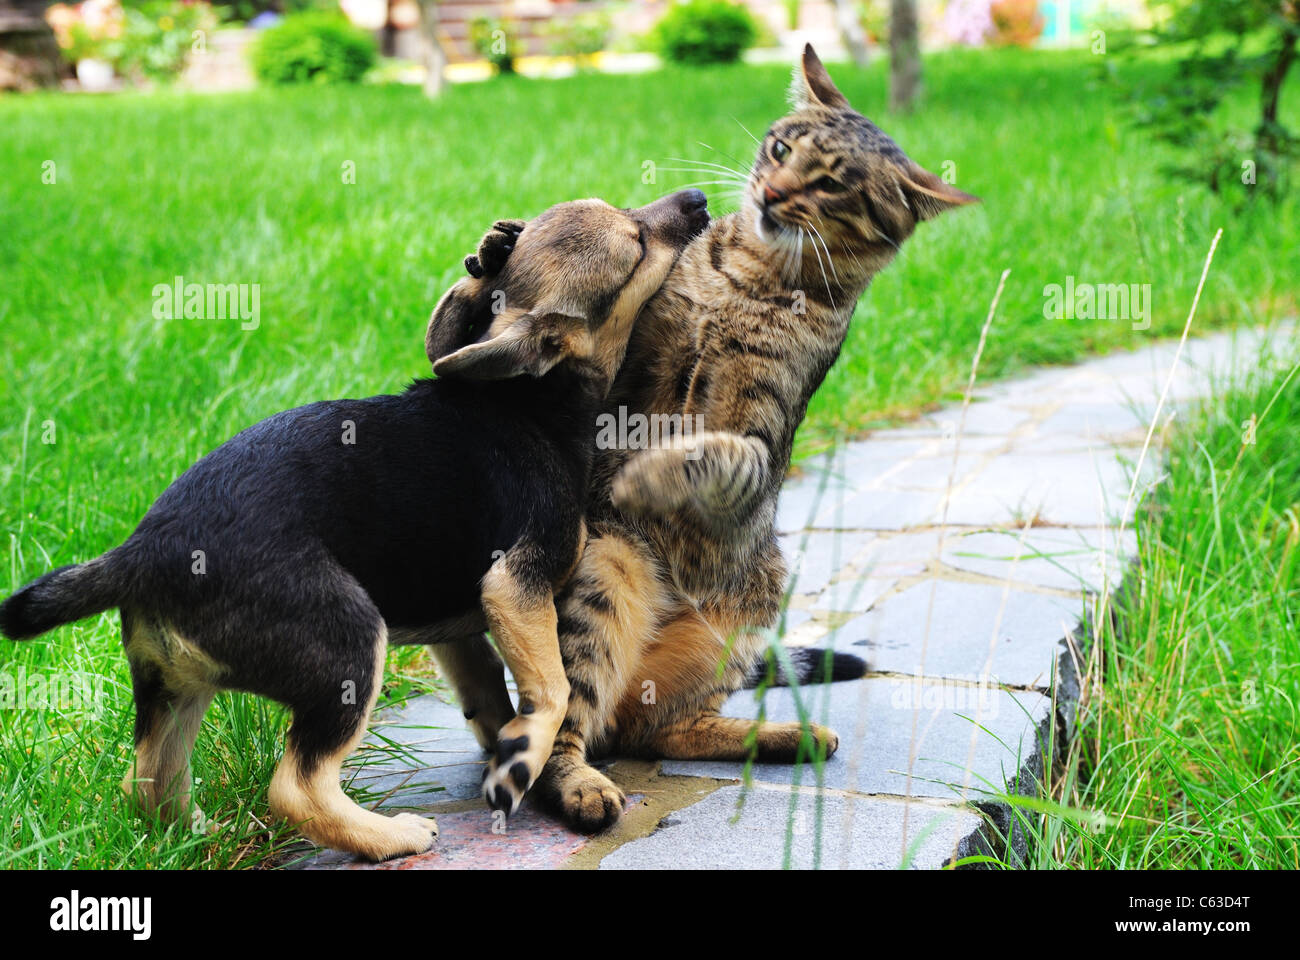 can a cat beat a dog in a fight